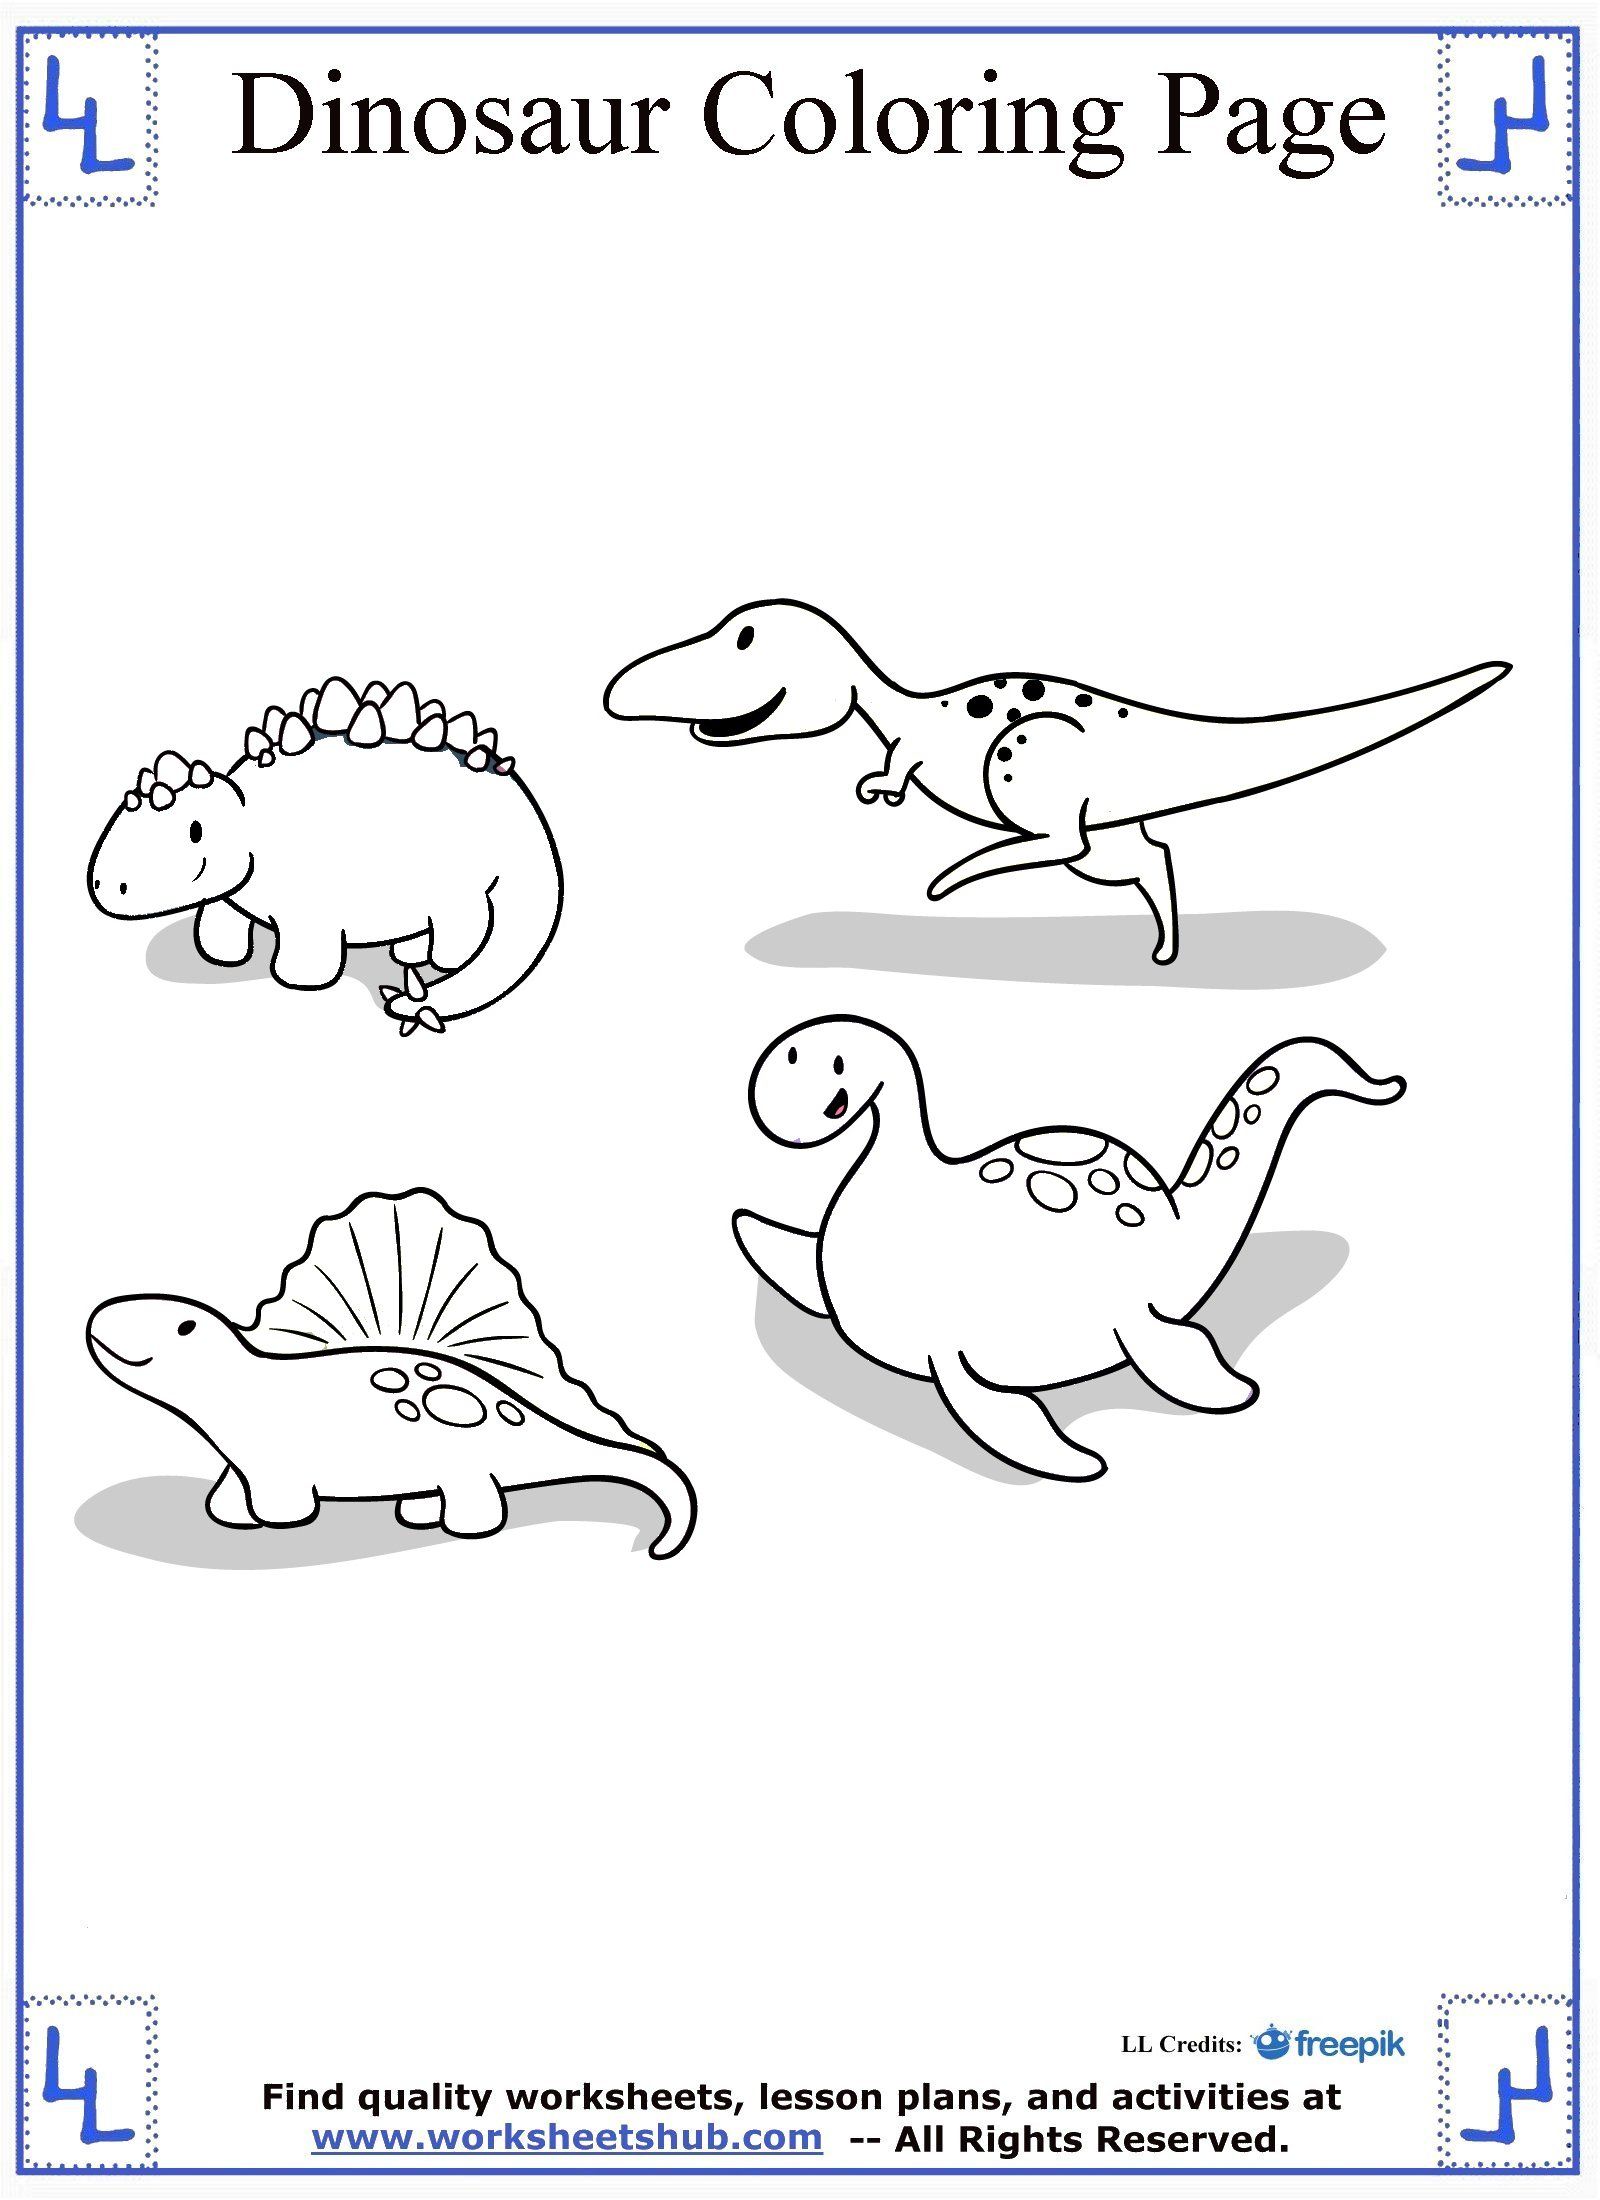 Tiny dinosaurs coloring page dinosaur coloring pages dinosaur coloring dinosaur pictures